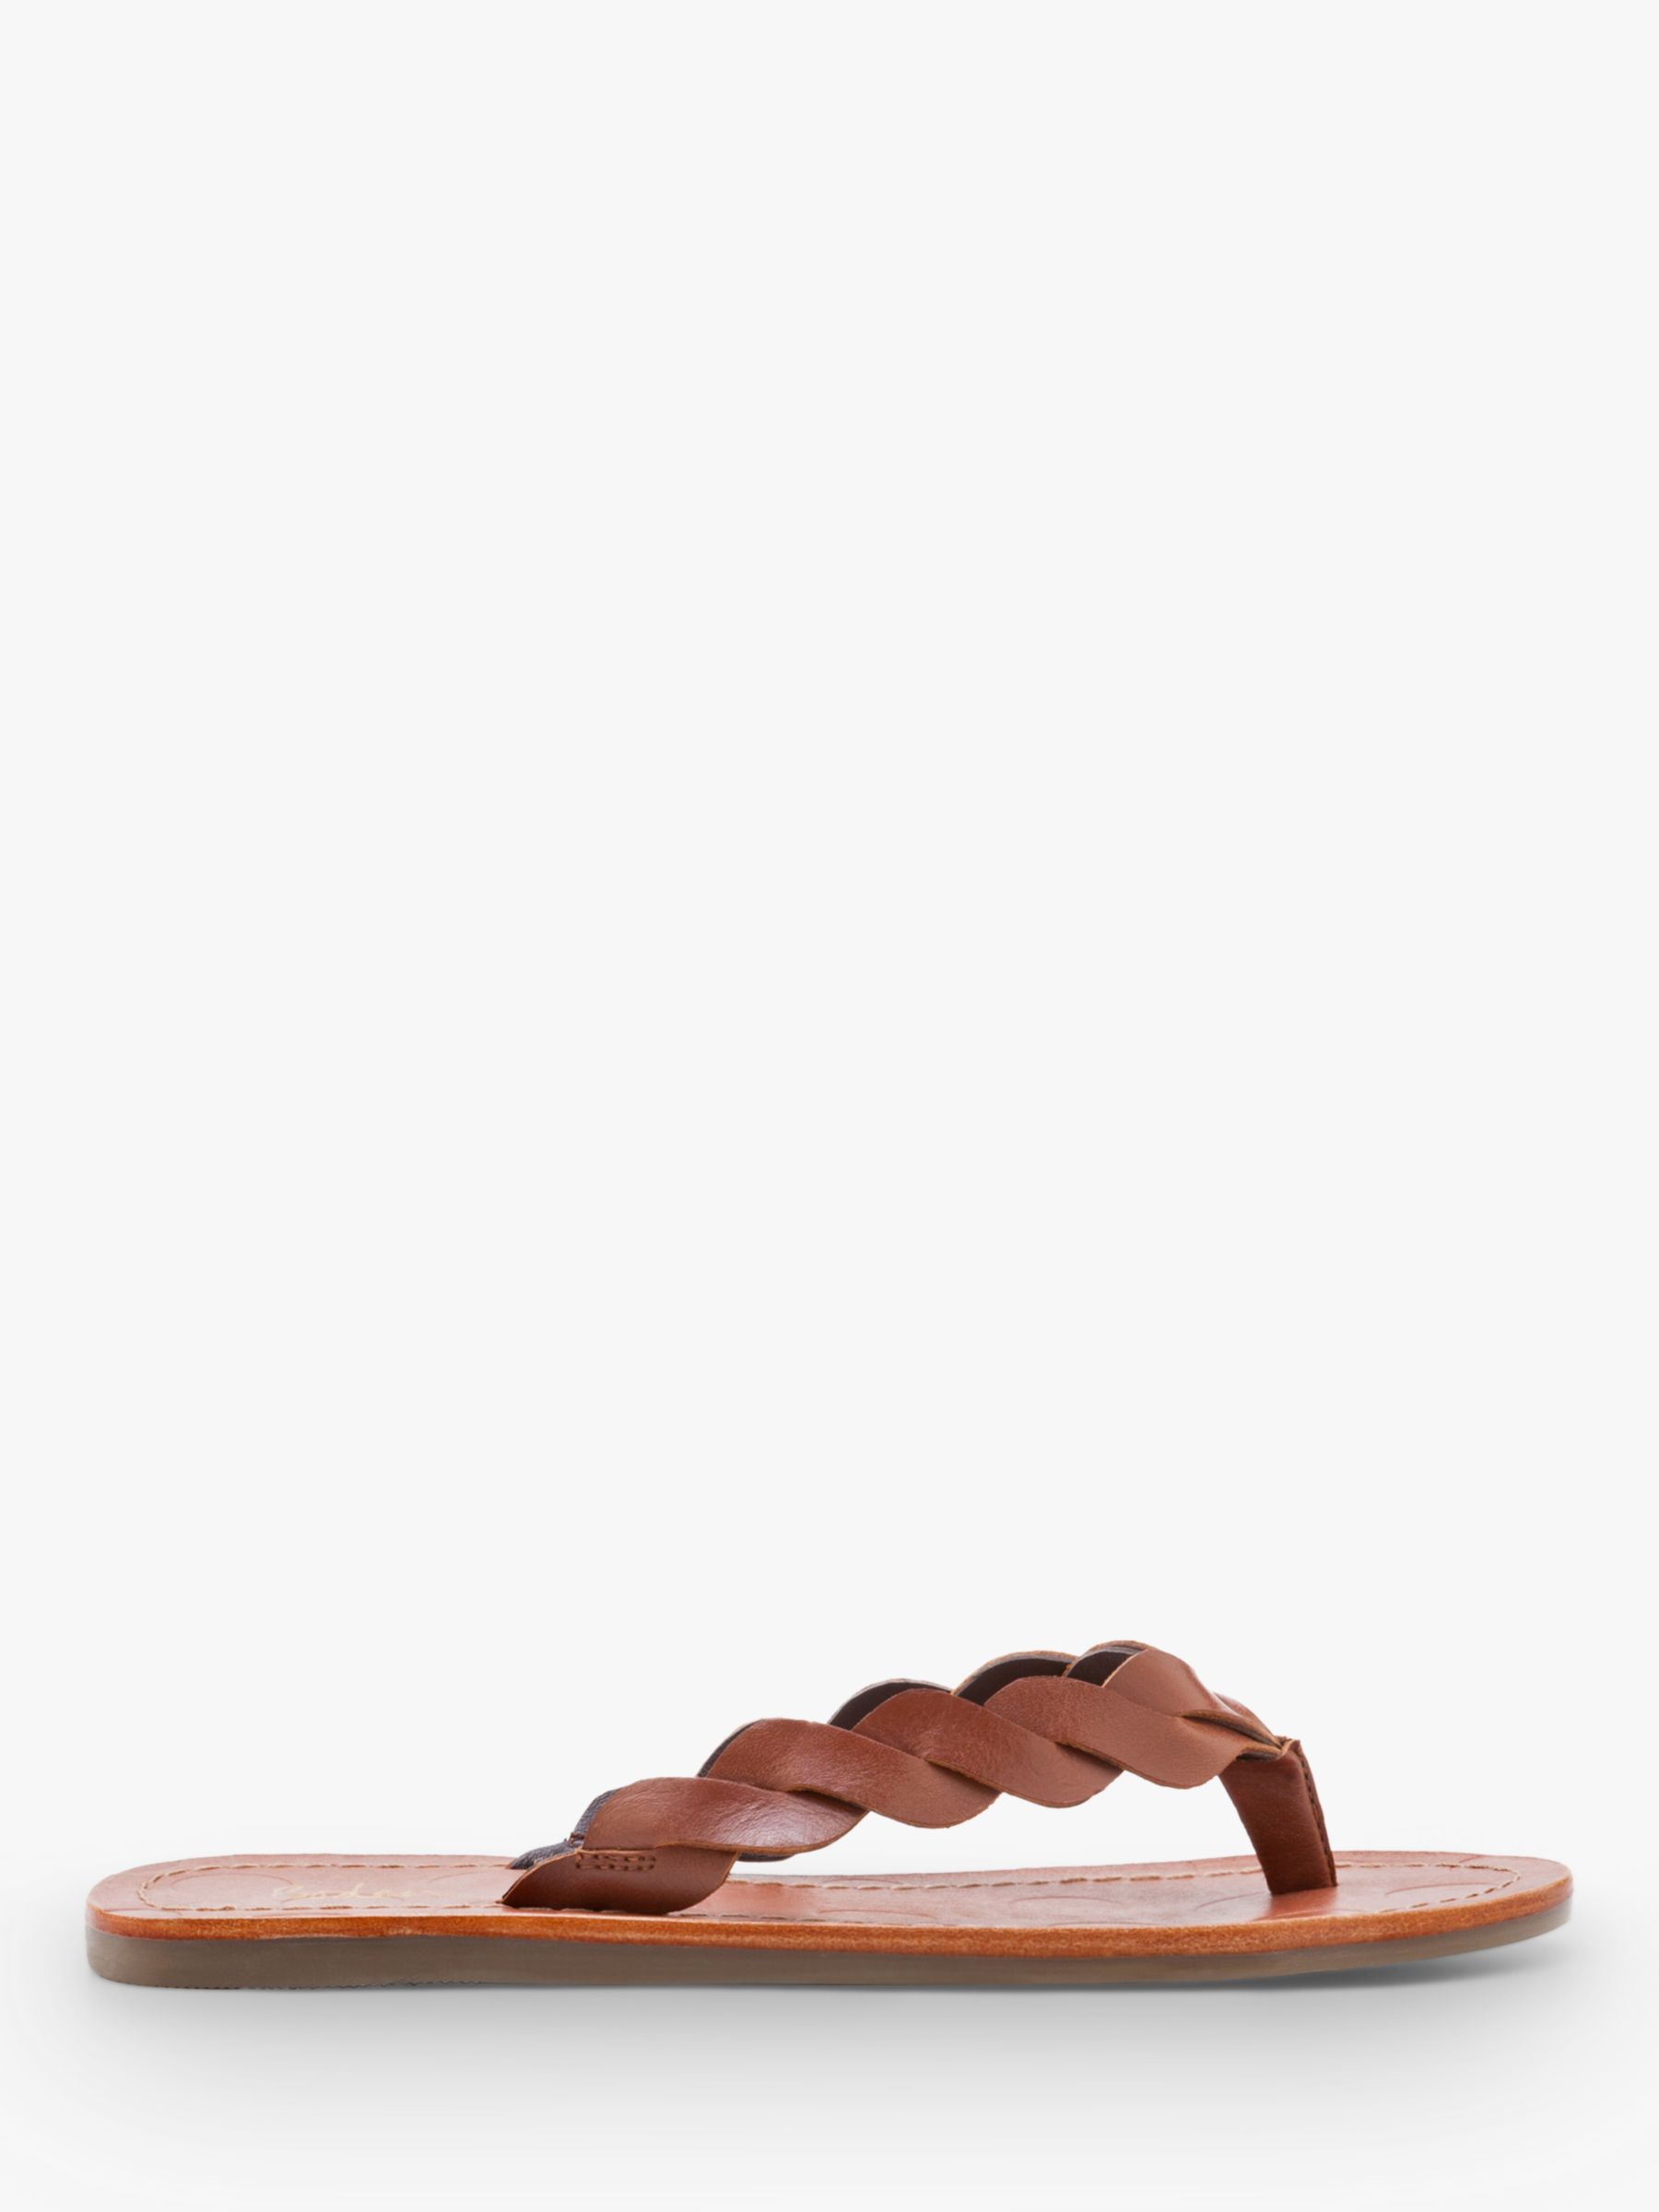 Boden Clementine Woven Flip Flop Sandals